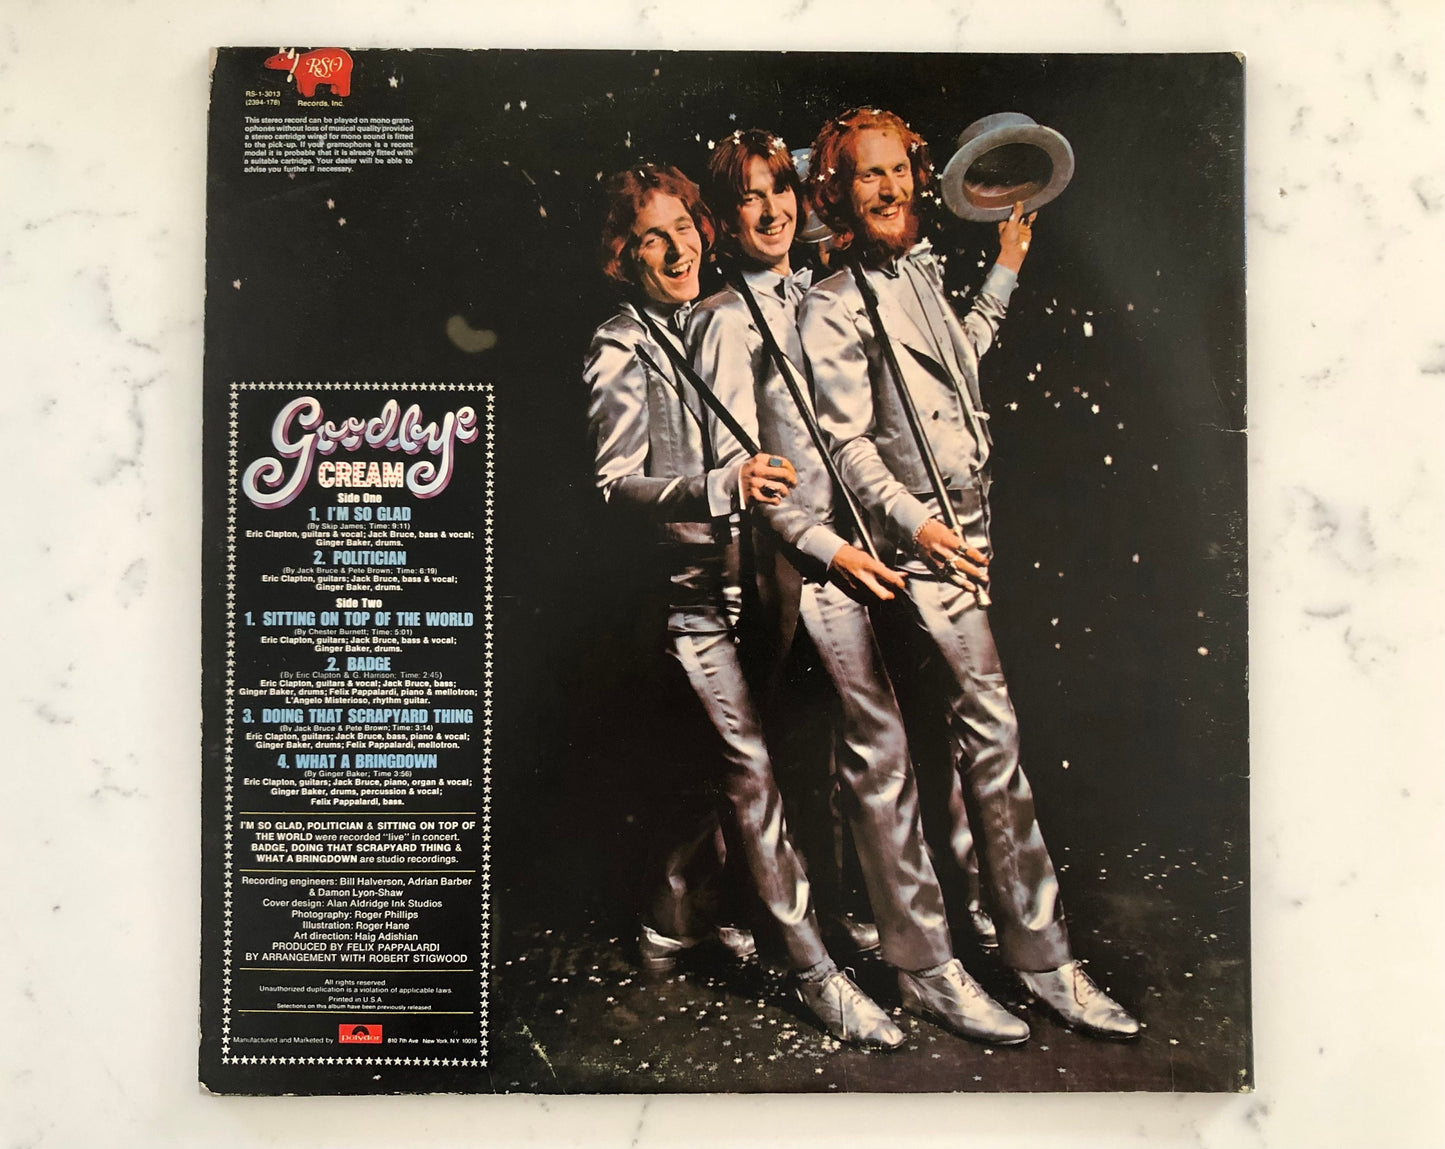 Cream Goodbye Cream PROMO Collectors Edition Original 1977 RS-1-3013 Vintage Vinyl Psychedelic Records Eric Clapton, Ginger Baker